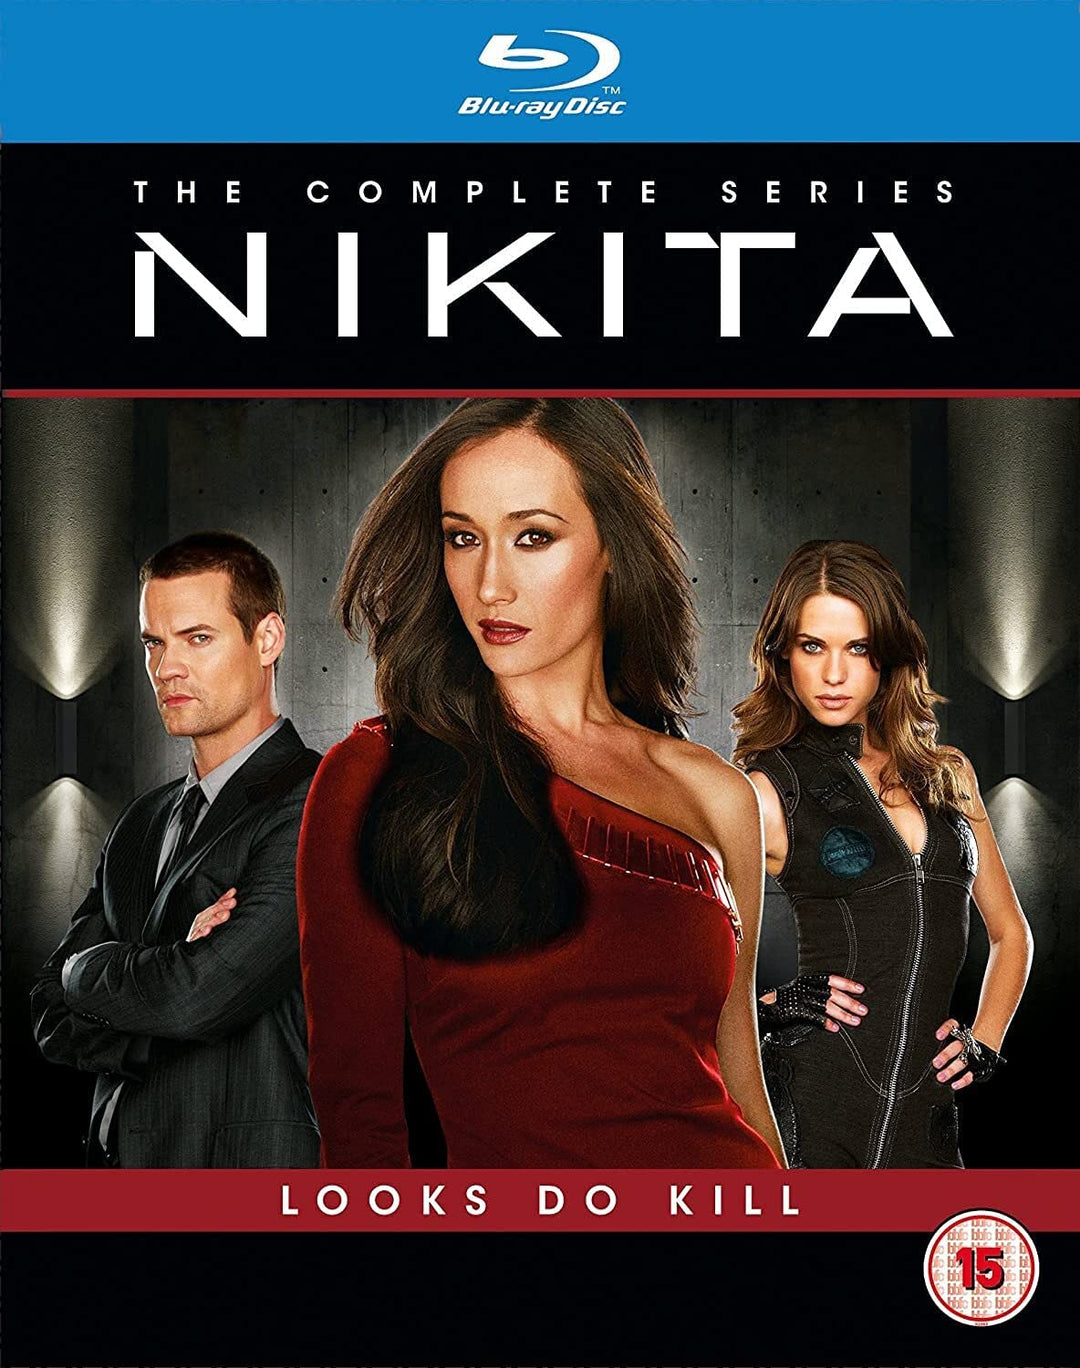 Nikita - The Complete Series [Blu-ray] [2014] [Region Free]